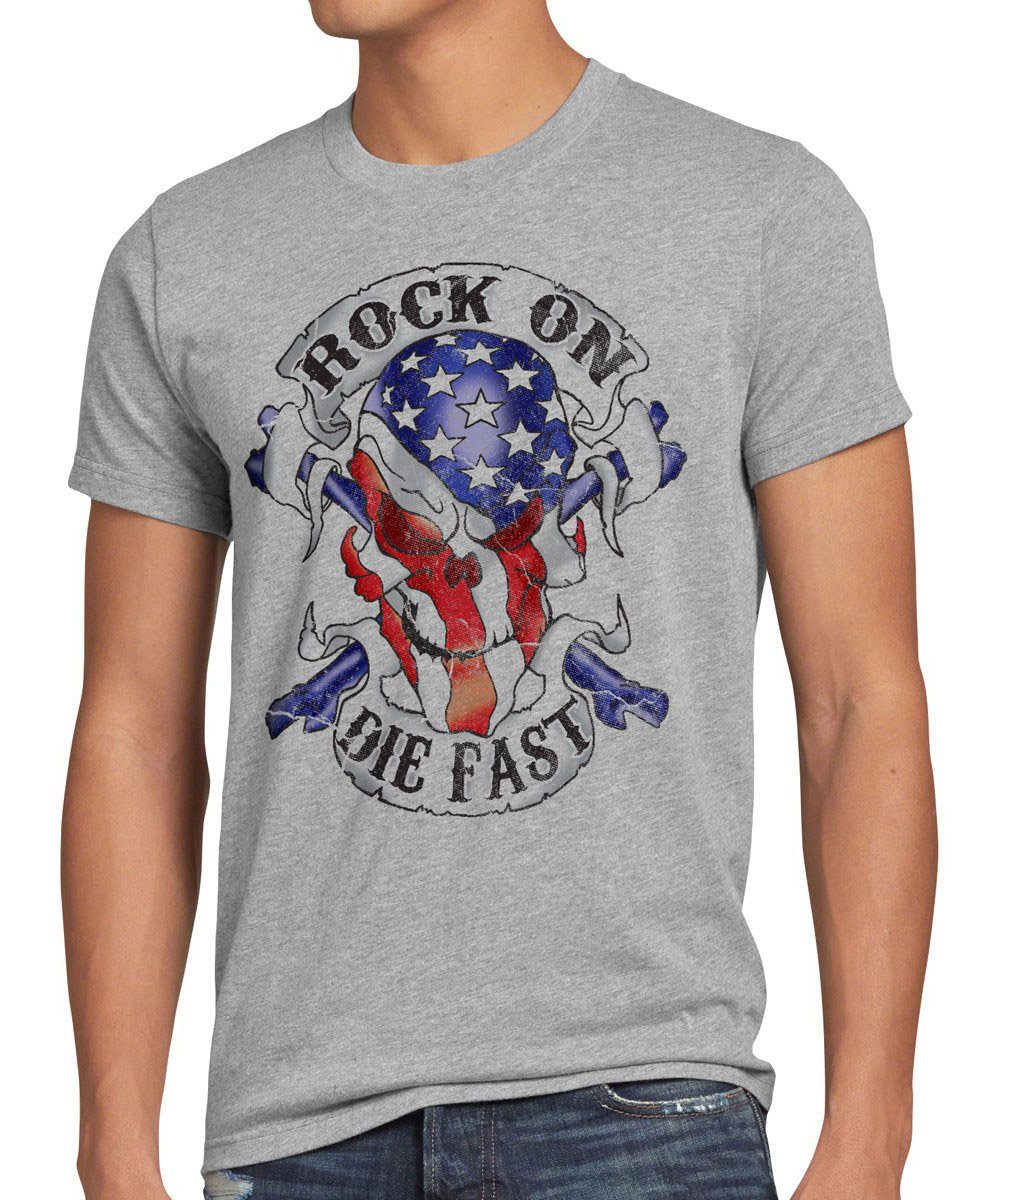 style3 Print-Shirt Herren T-Shirt USA Rocker Skull Totenkopf Flagge biker stars stripes amerika us grau meliert